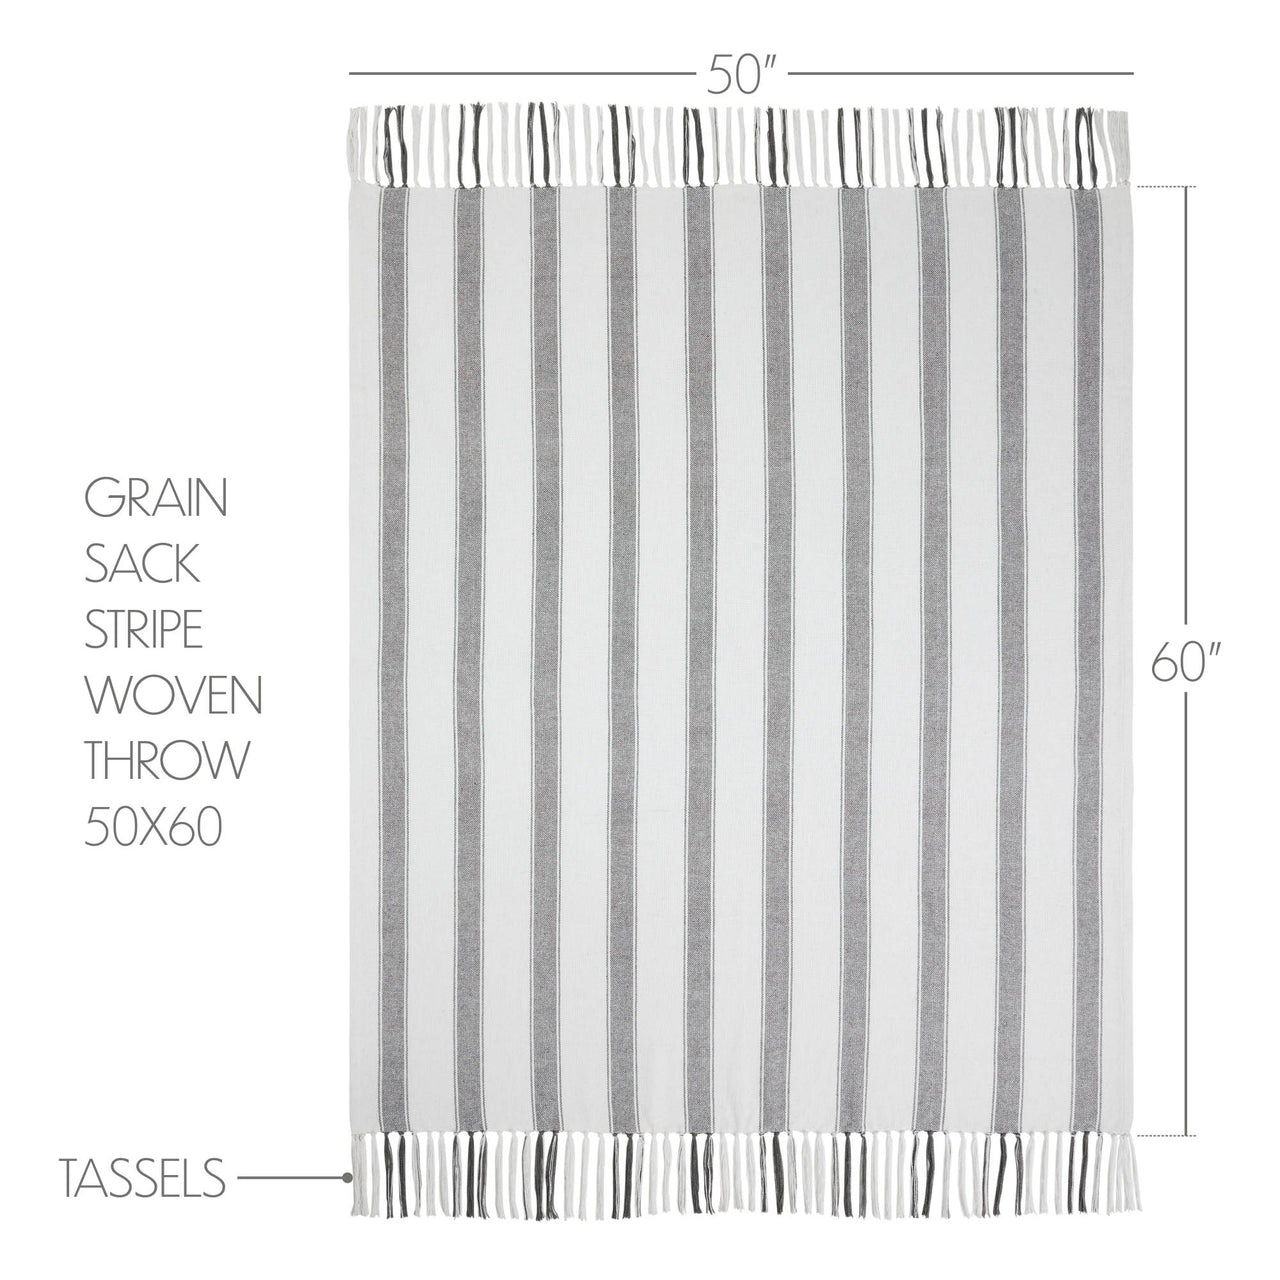 Grace Grain Sack Stripe Woven Throw 50"x60" VHC Brands